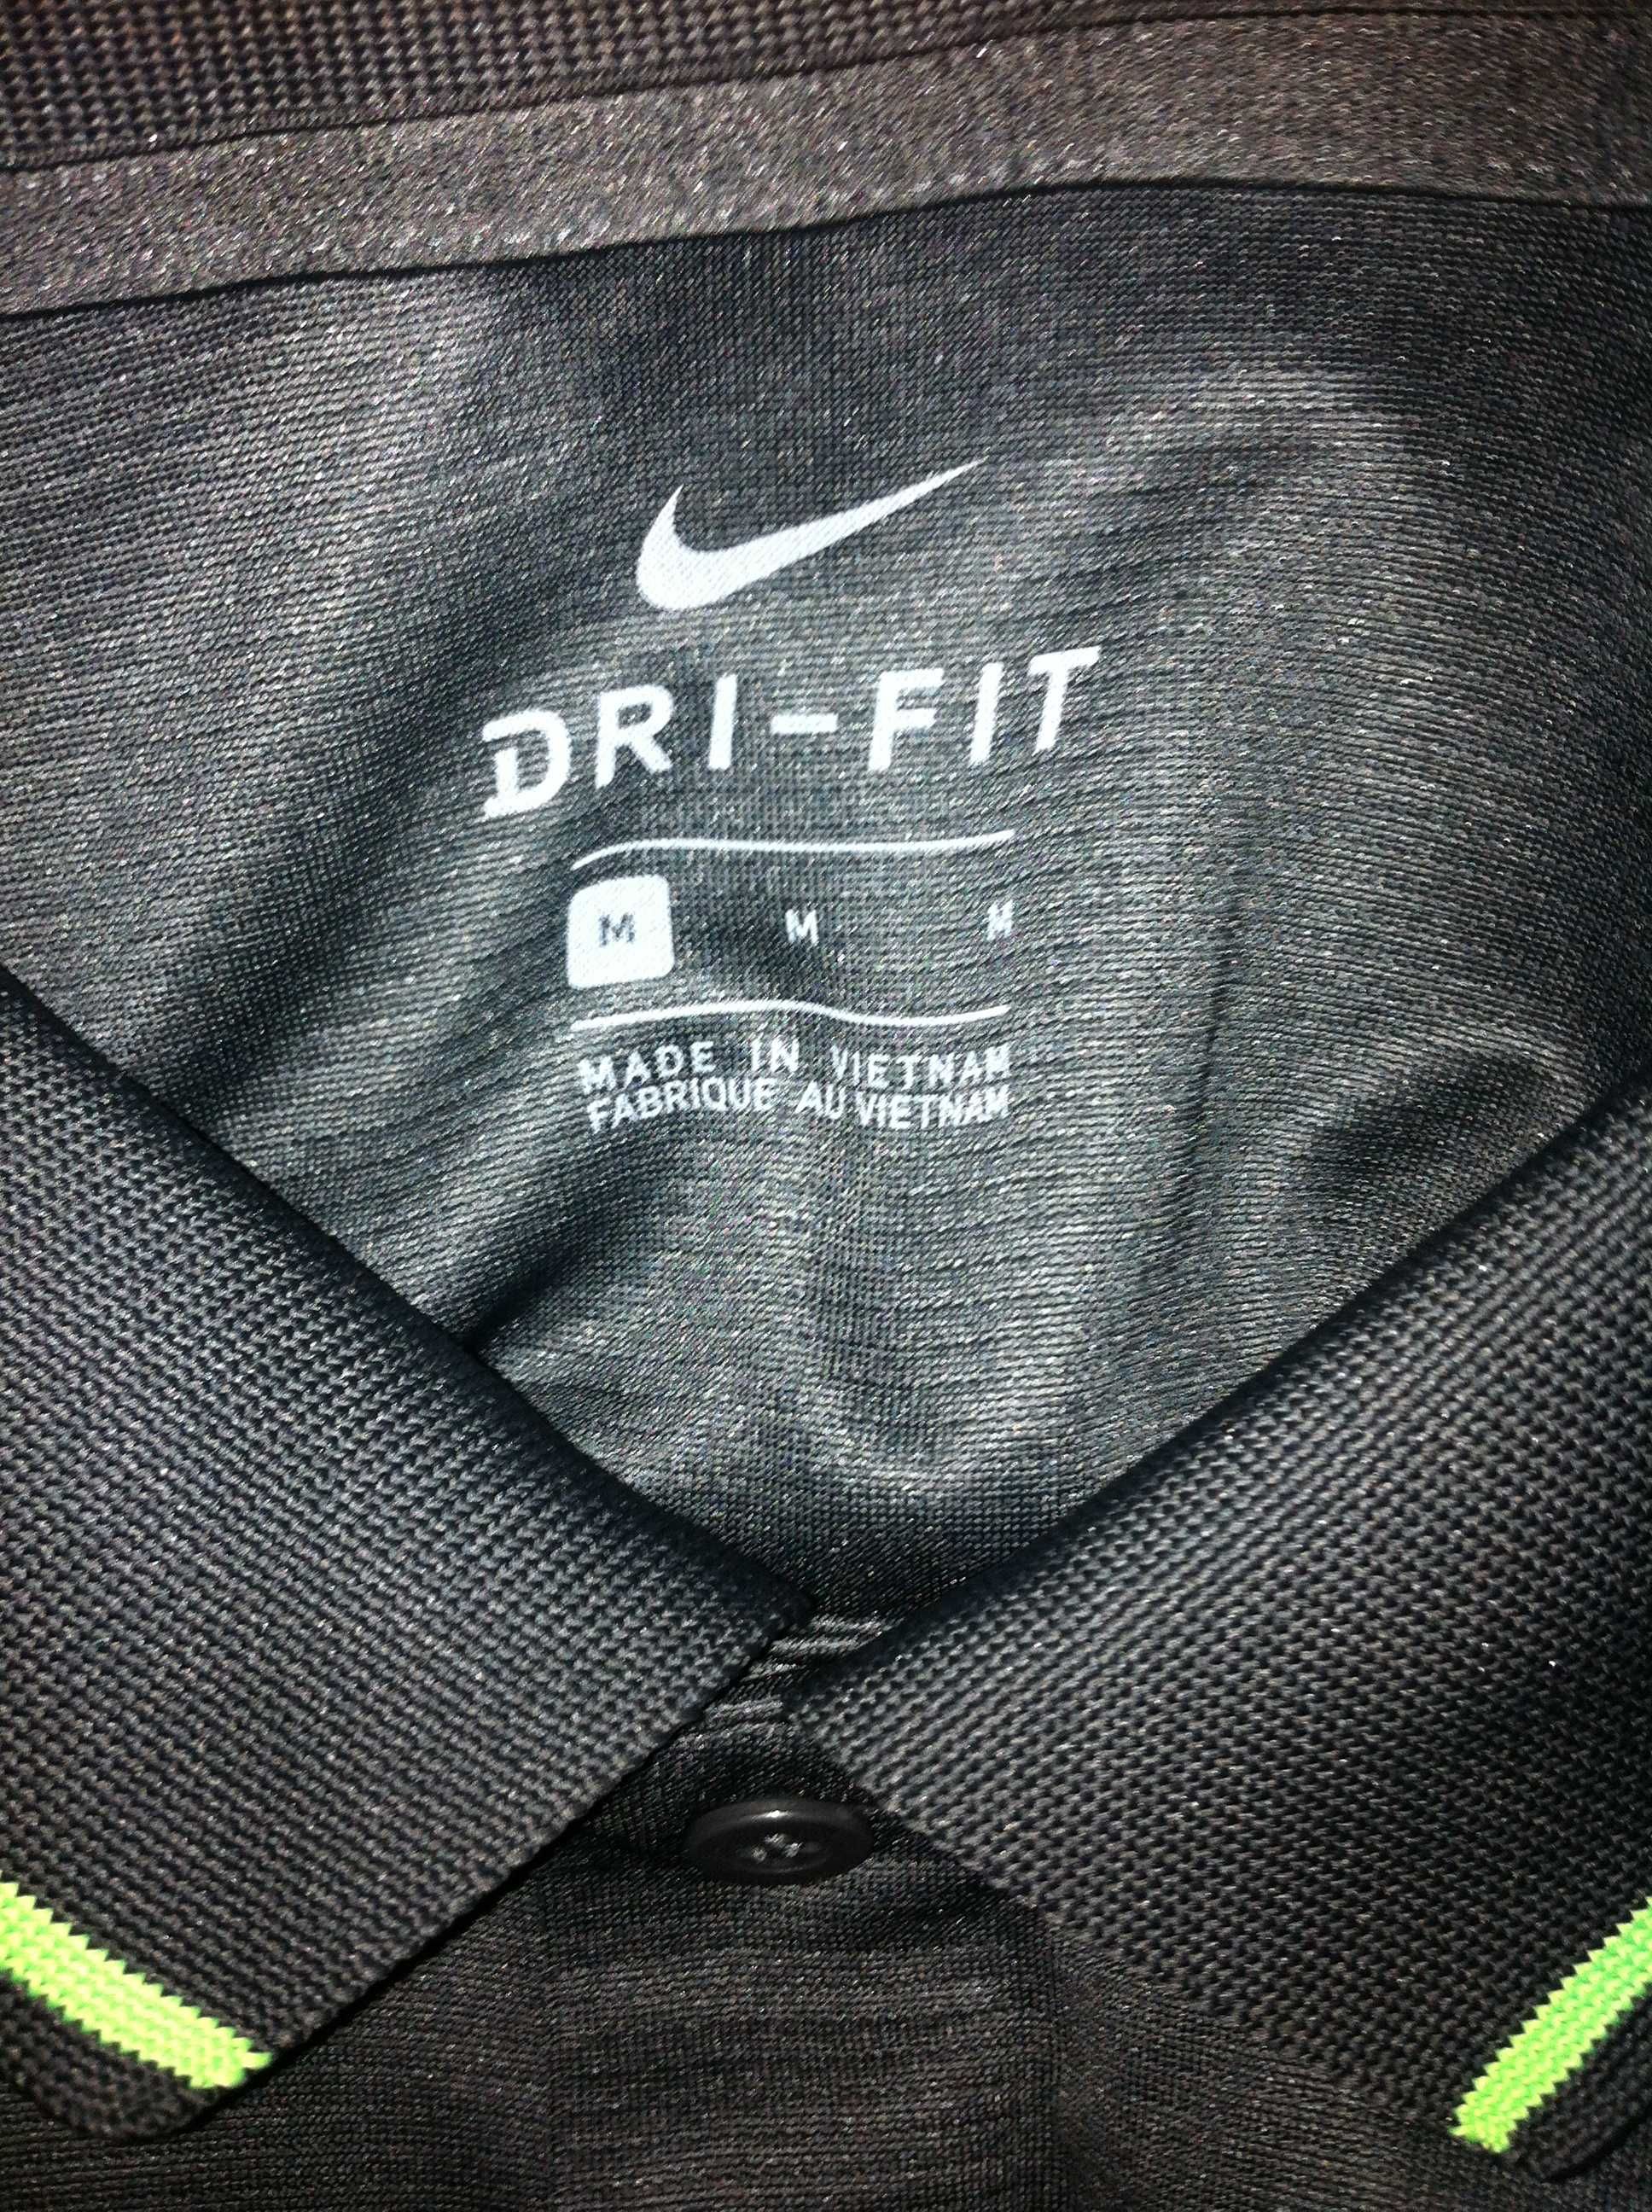 Tricou + Sort Nike -- Dry Fit -- Banii merg la un baiat bolnav.